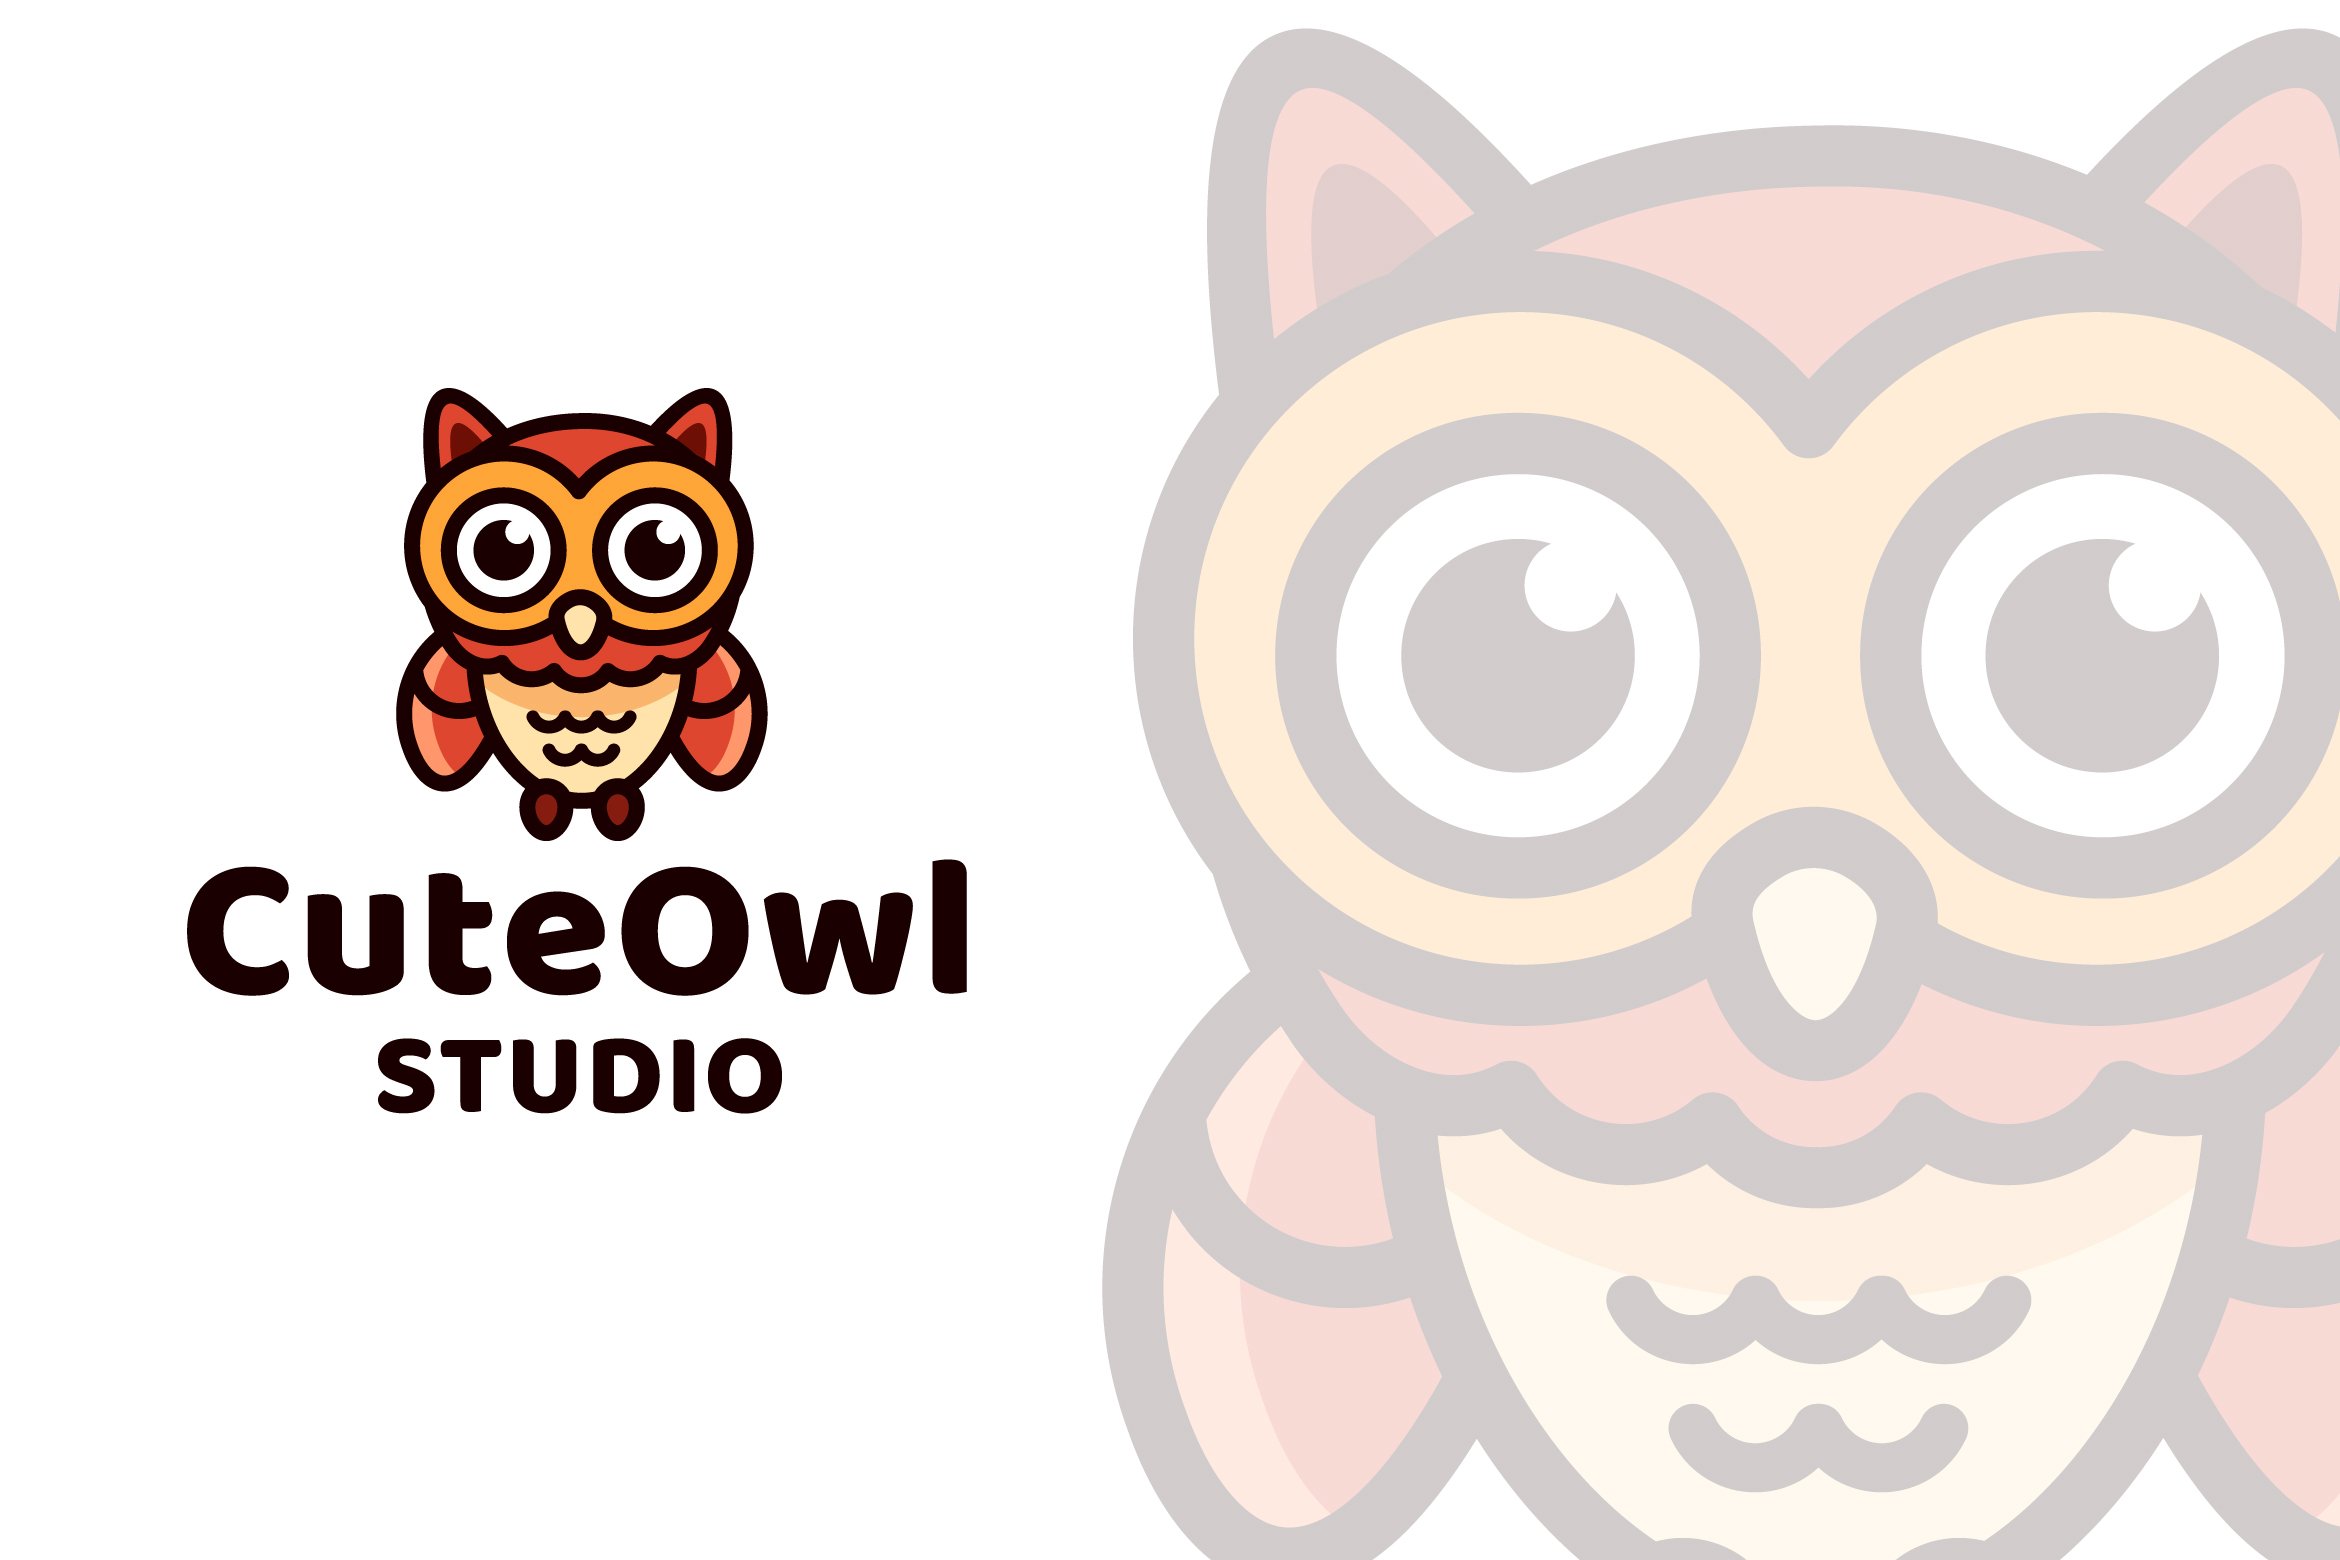 Cute Owl Logo Template cover image.